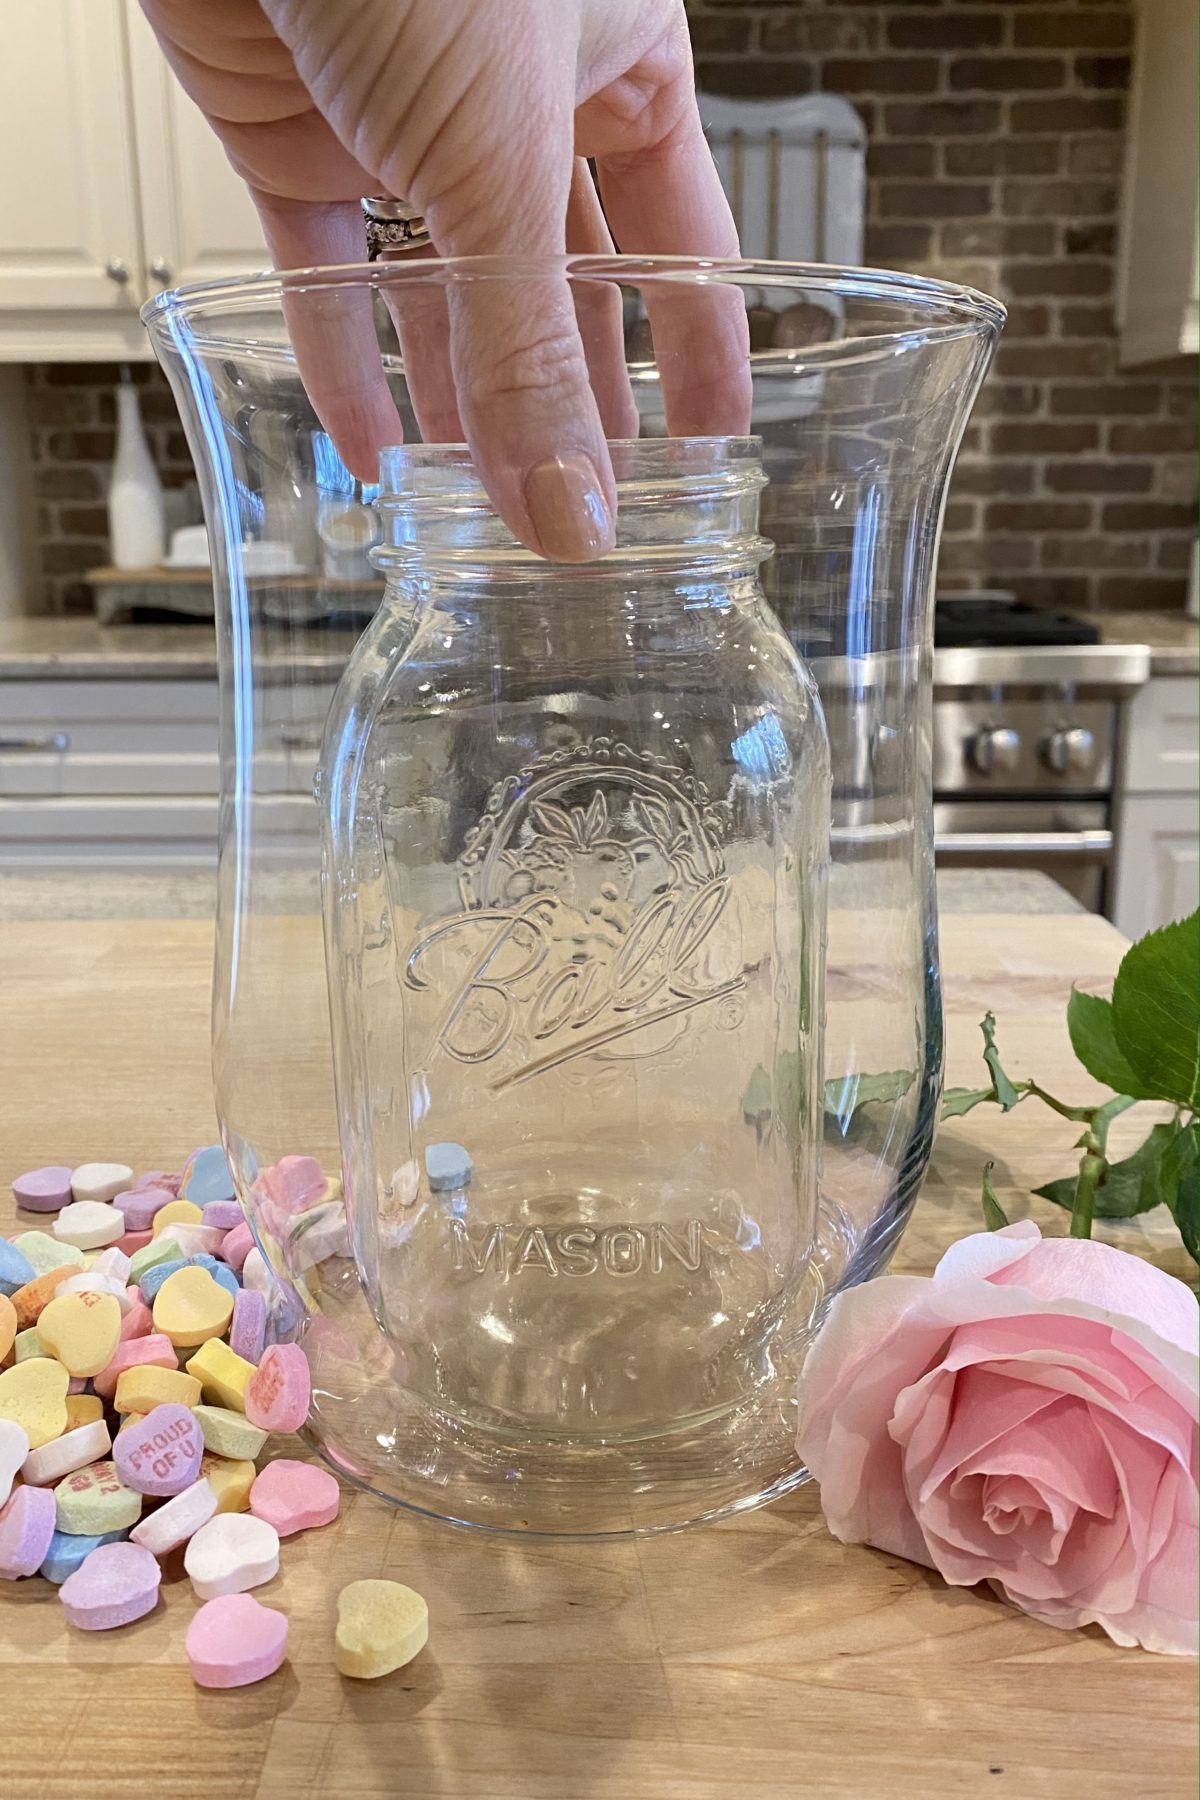 Placing a smaller glass jar inside a glass vase.